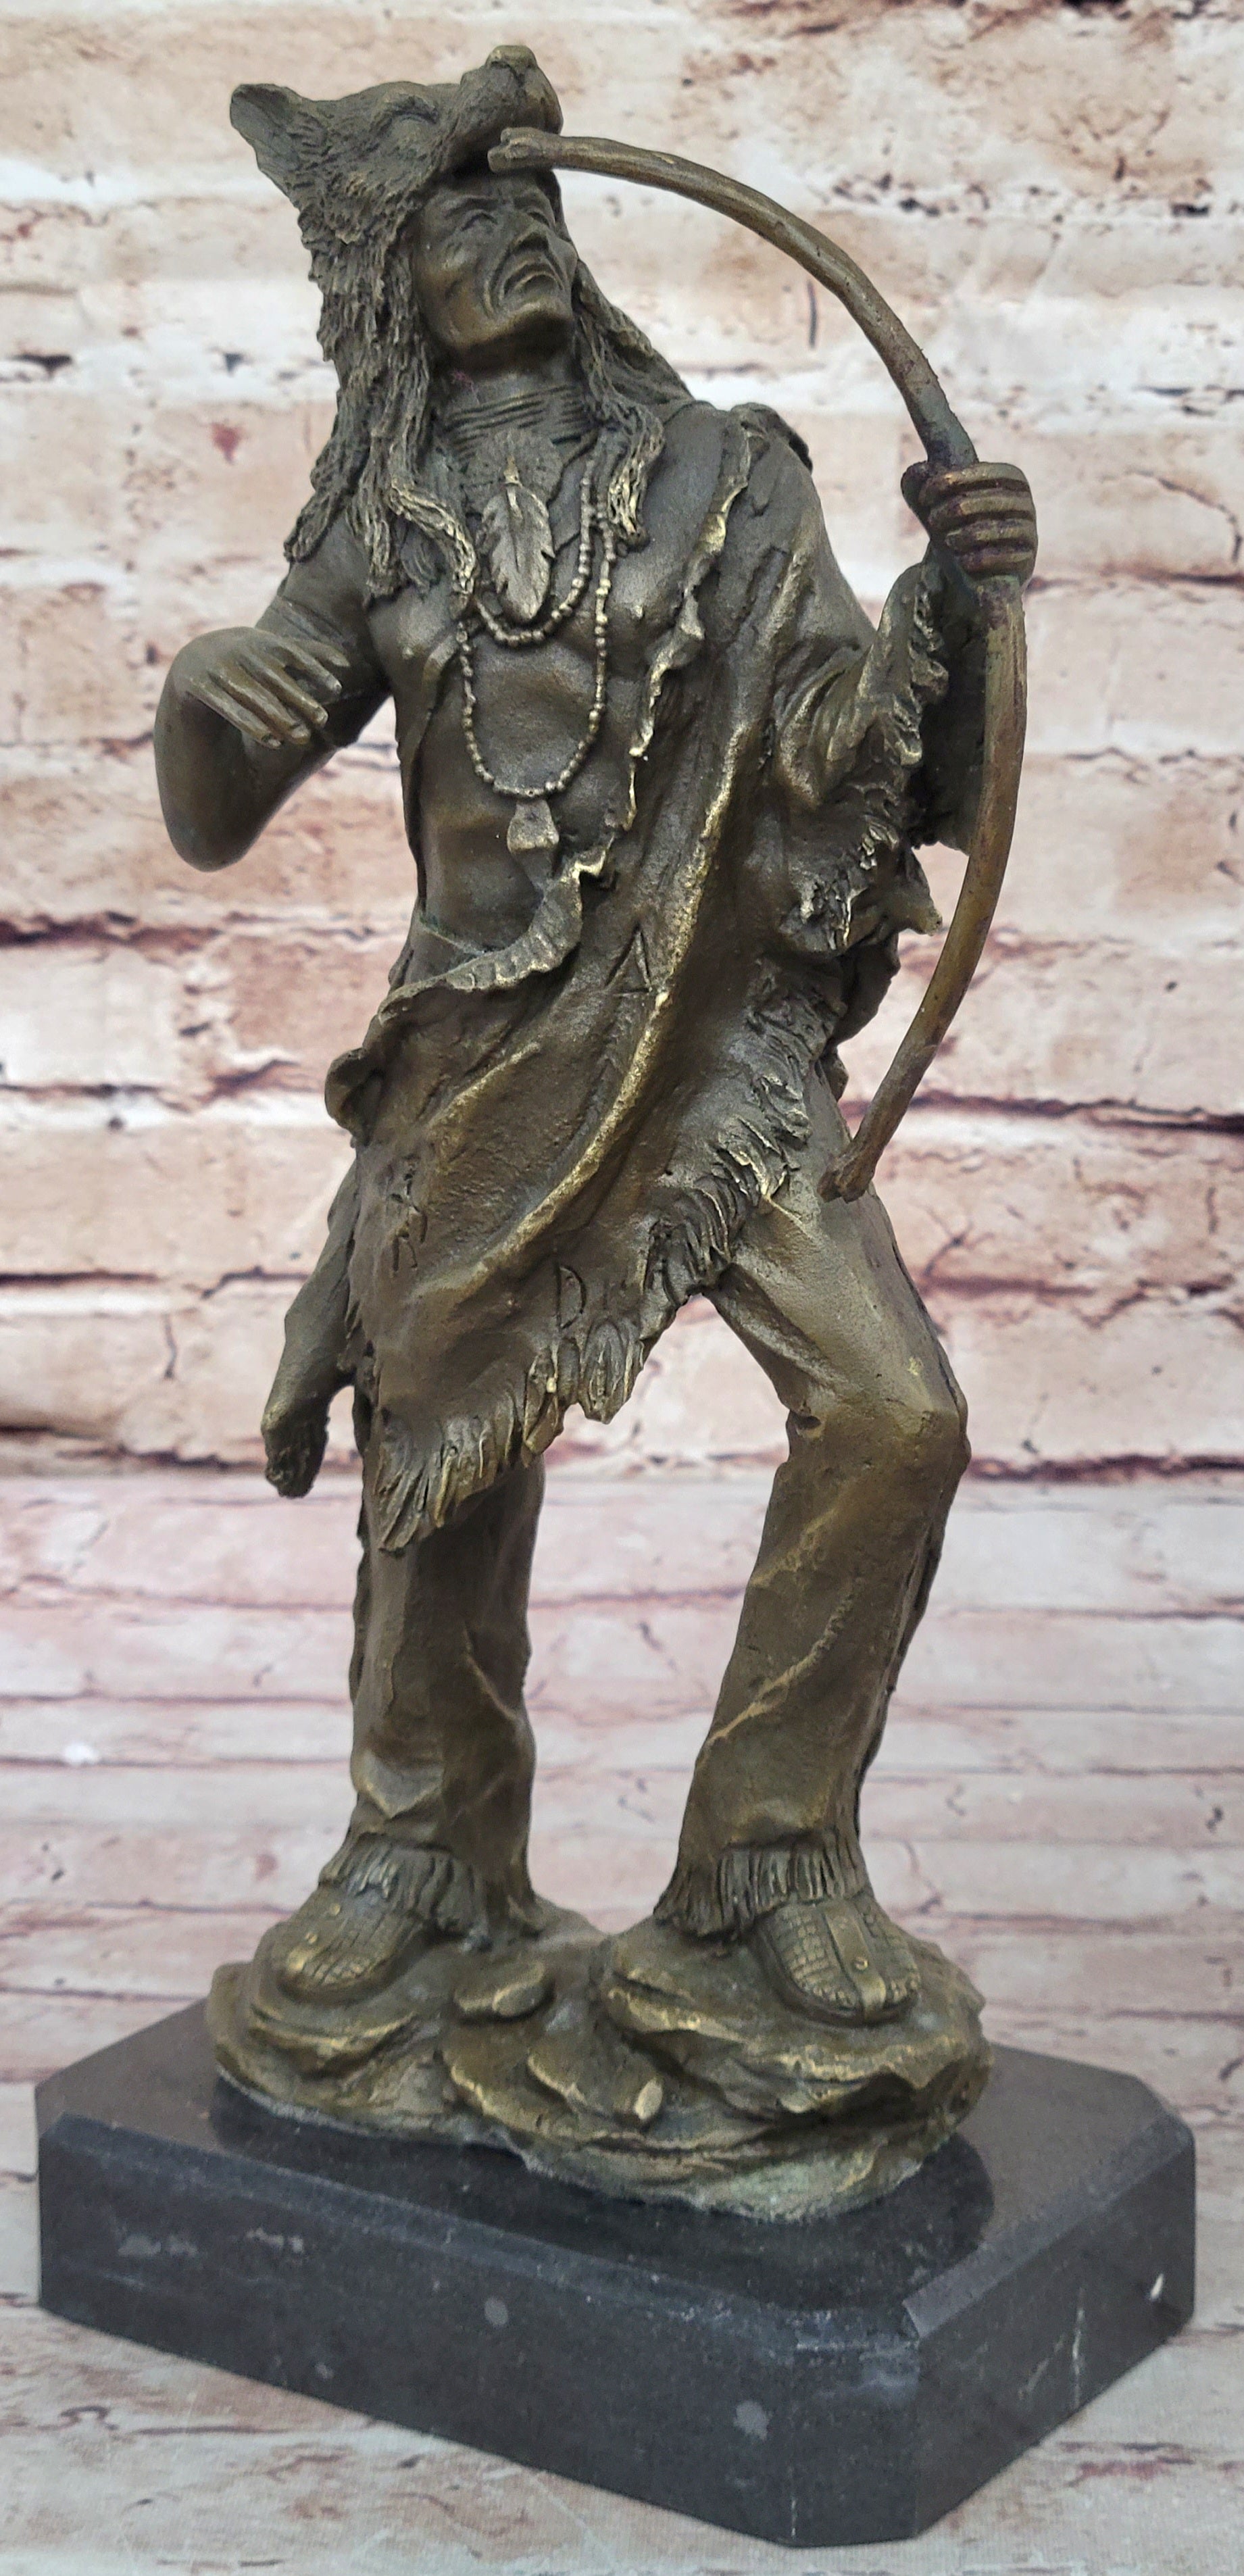 Handcrafted bronze sculpture SALE Dec Base Marble Warrior Chief Indian Cast Hot